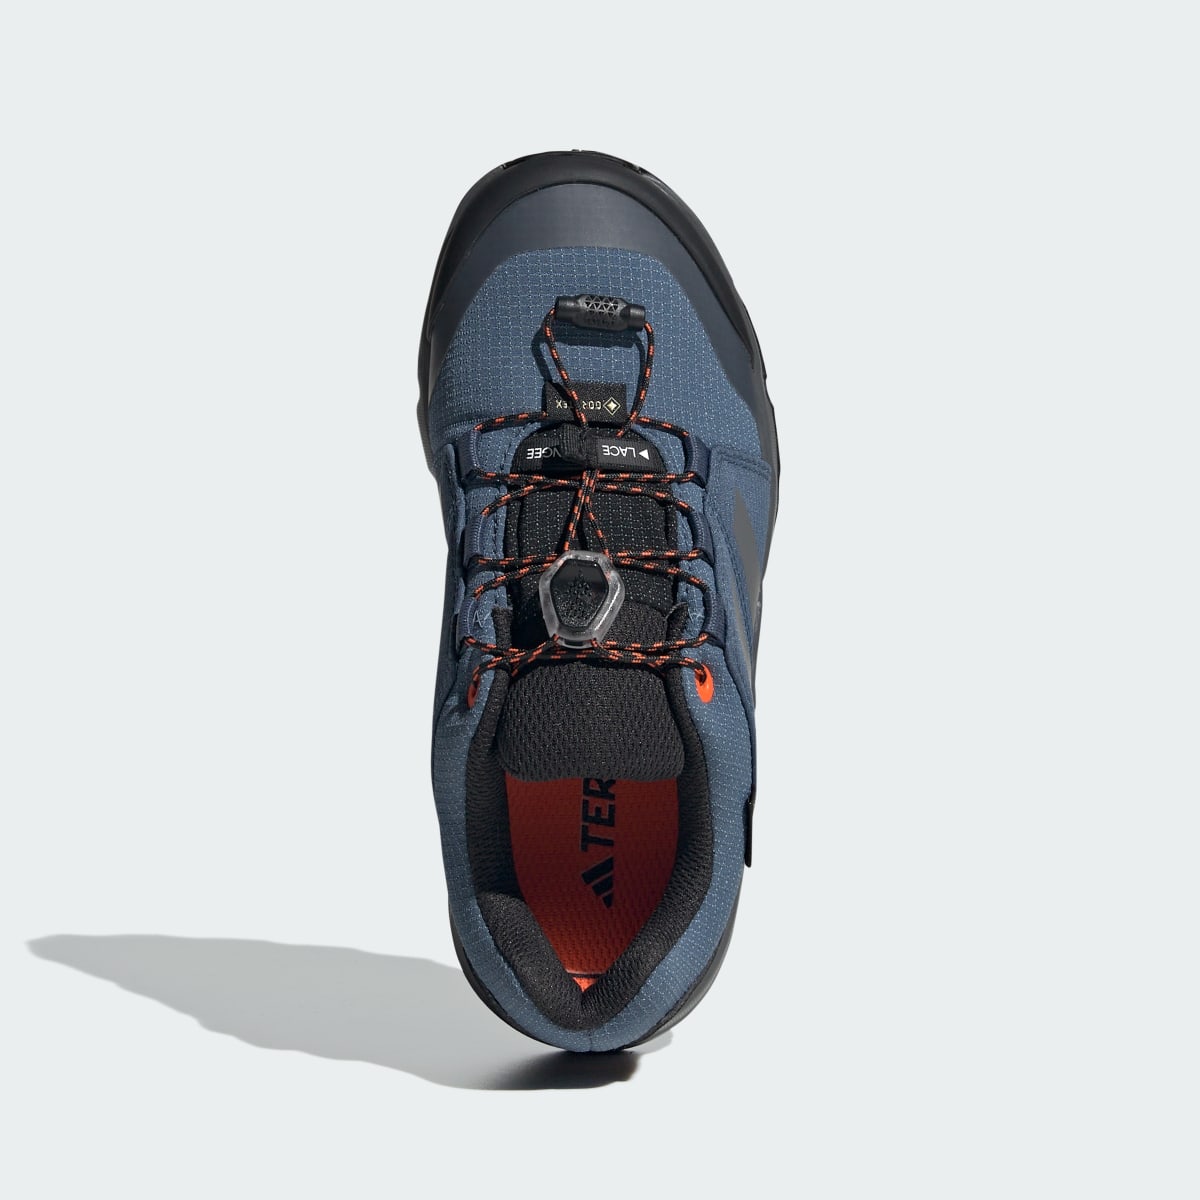 Adidas Terrex GORE-TEX Hiking Shoes. 4